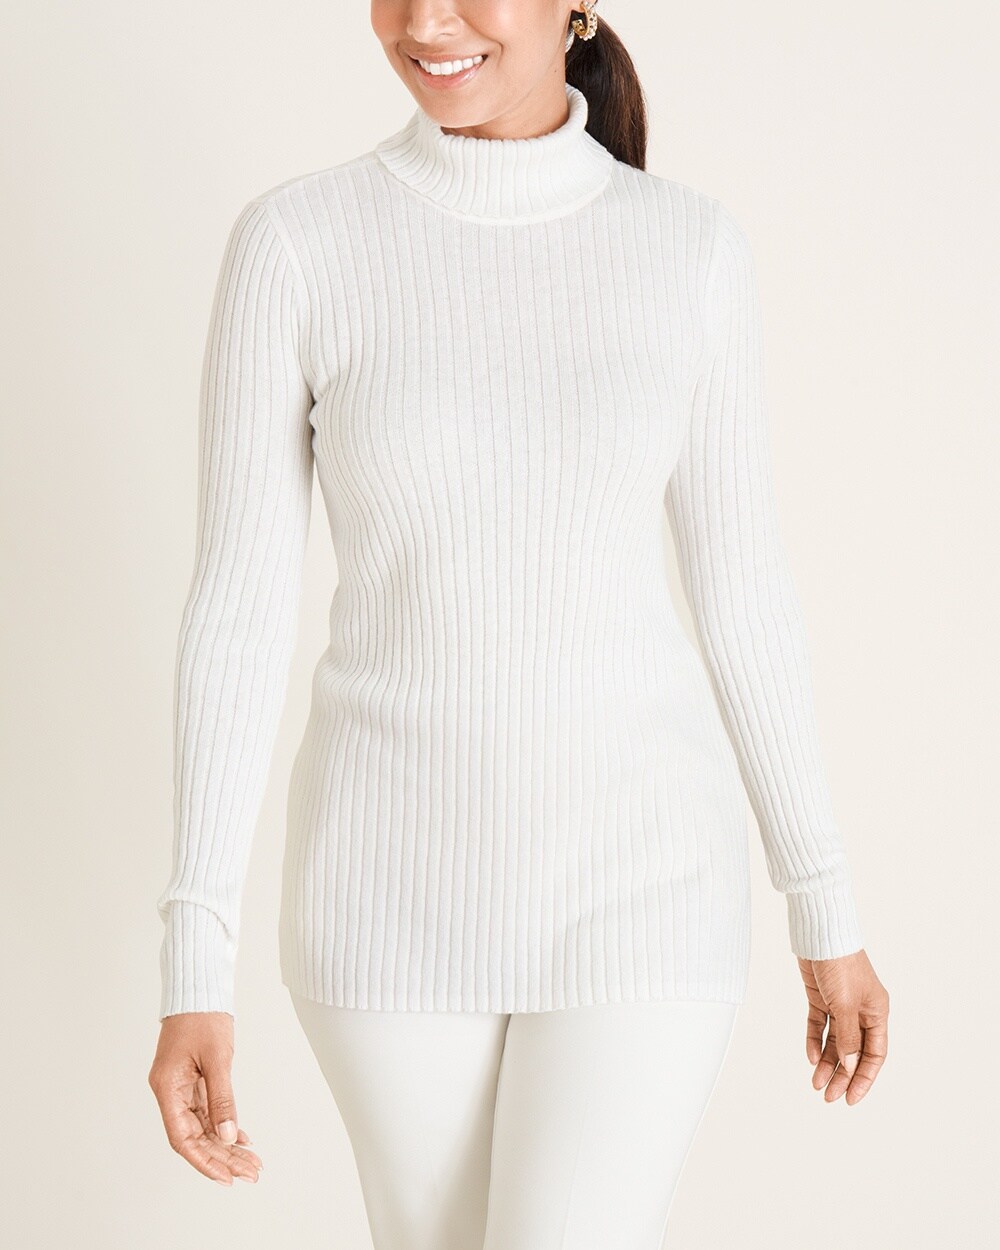 Petite Fashion Blog, Chicos CoolMax Turtleneck Sweater